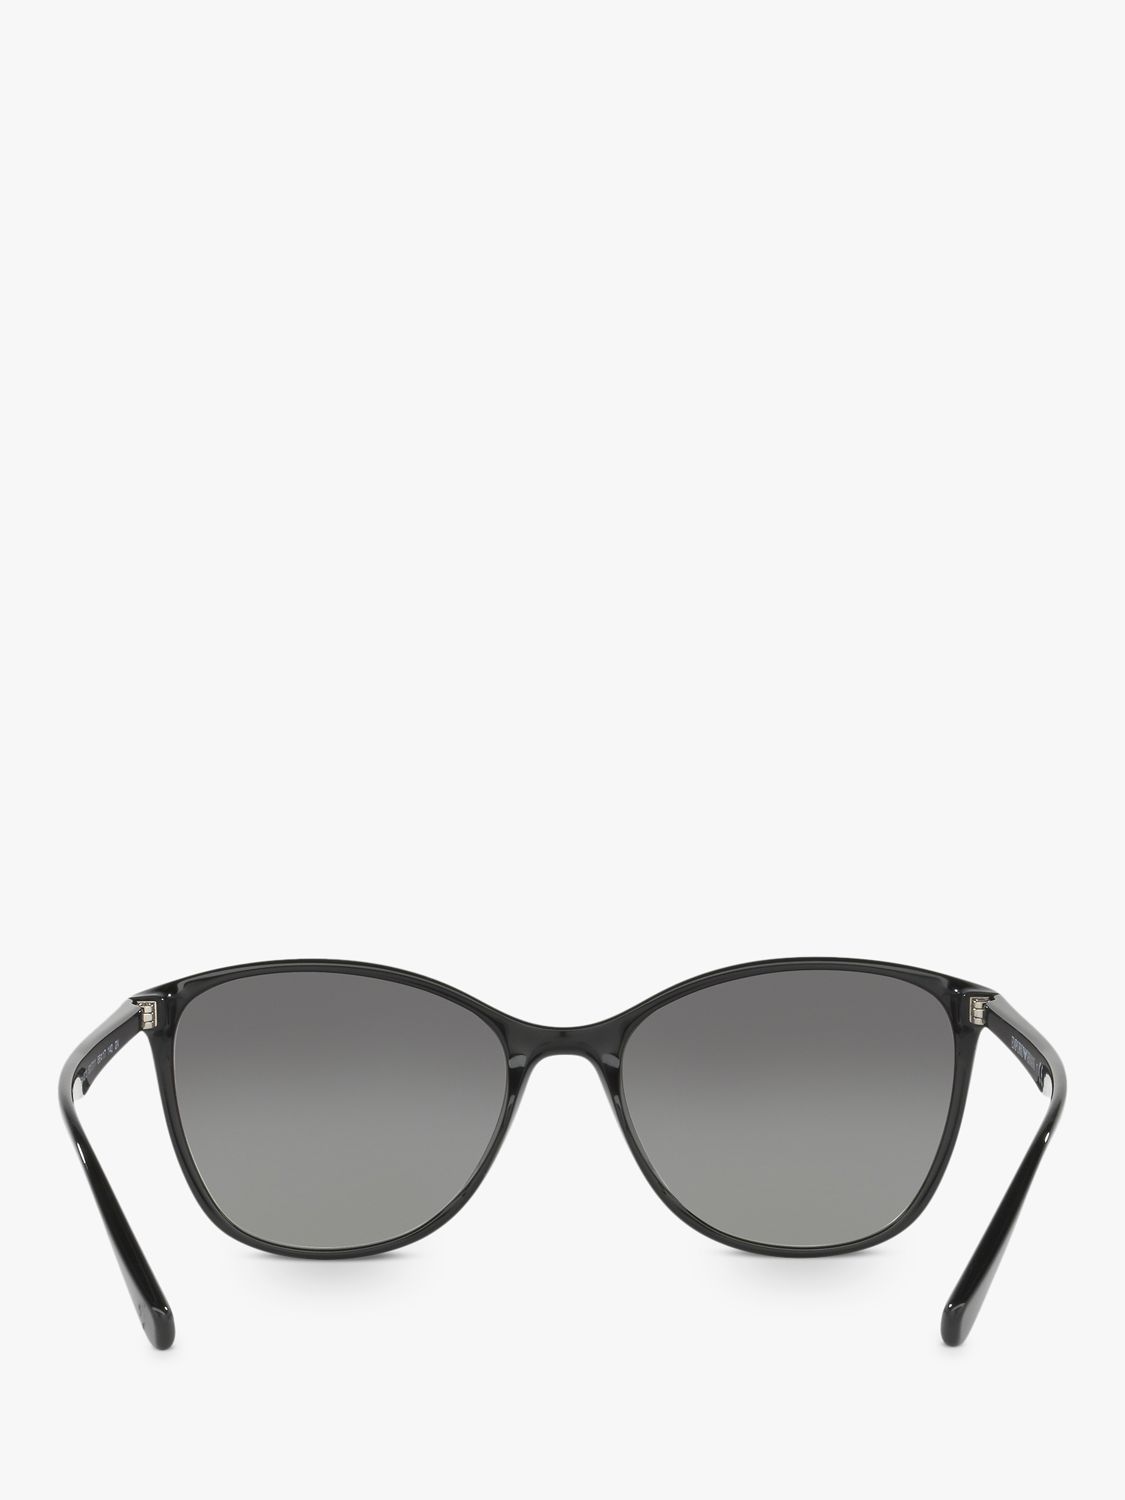 Emporio Armani EA4073 Cat's Eye Sunglasses, Shiny Black/Grey Gradient ...